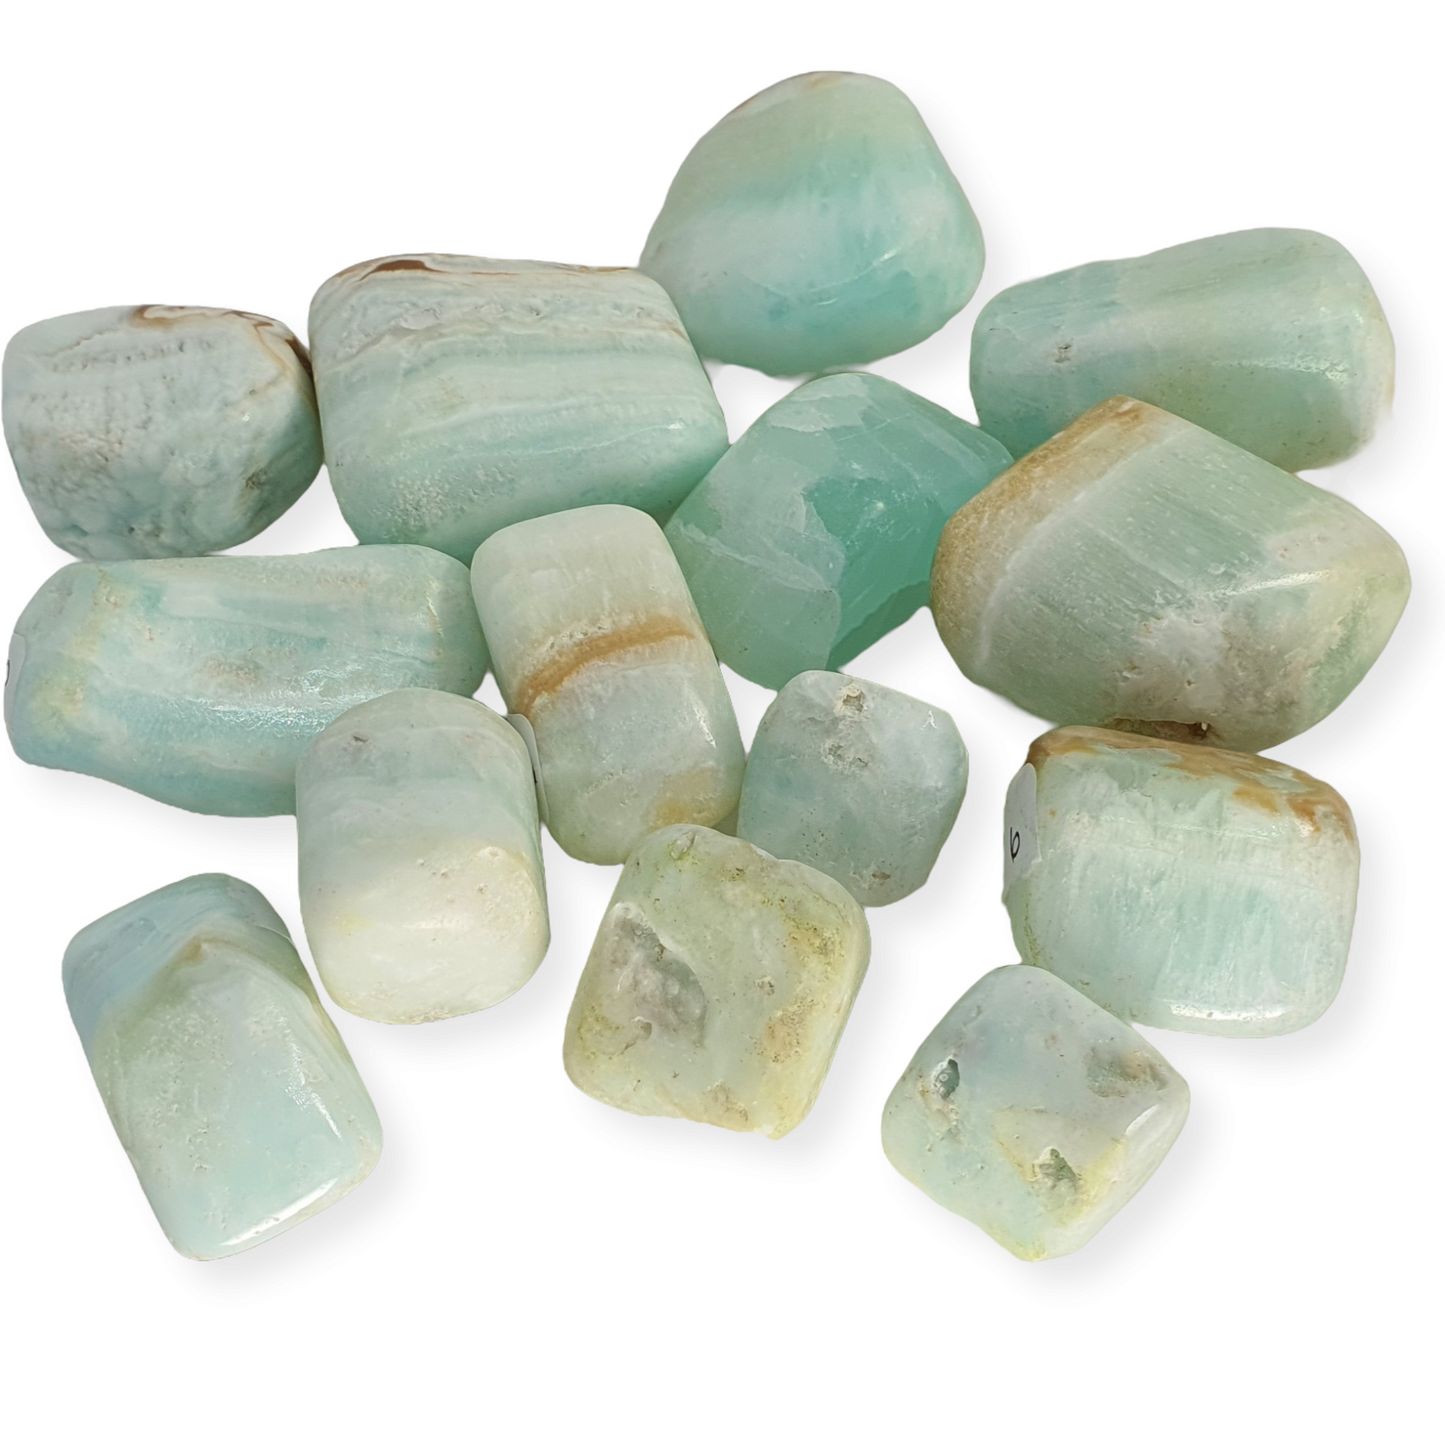 Crystals - Calcite (Caribbean) Tumbled Stone